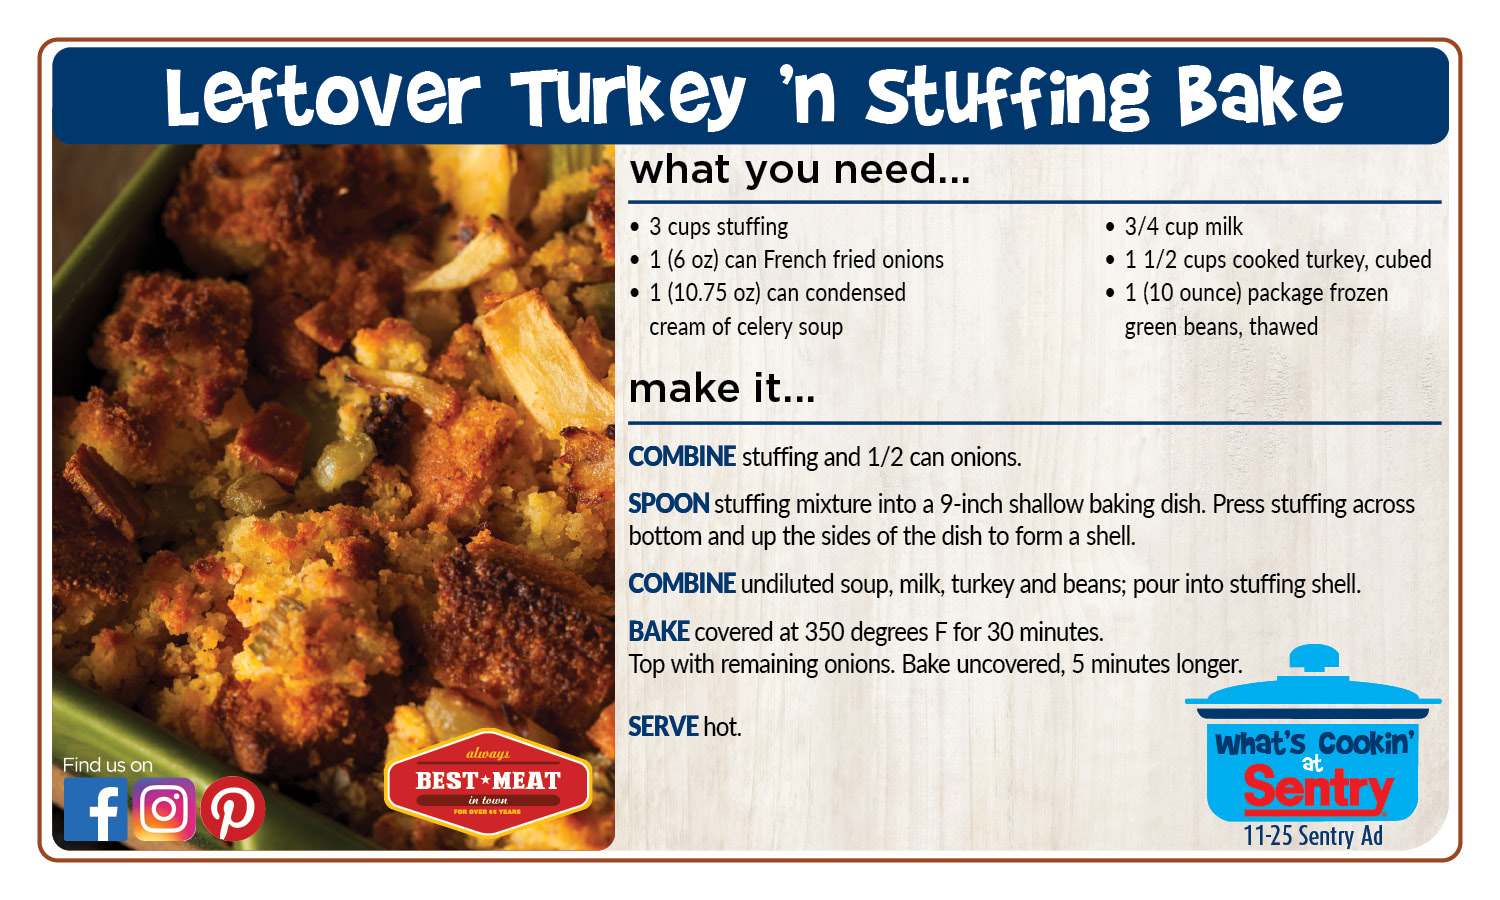 Leftover Turkey and Stuffing Bake